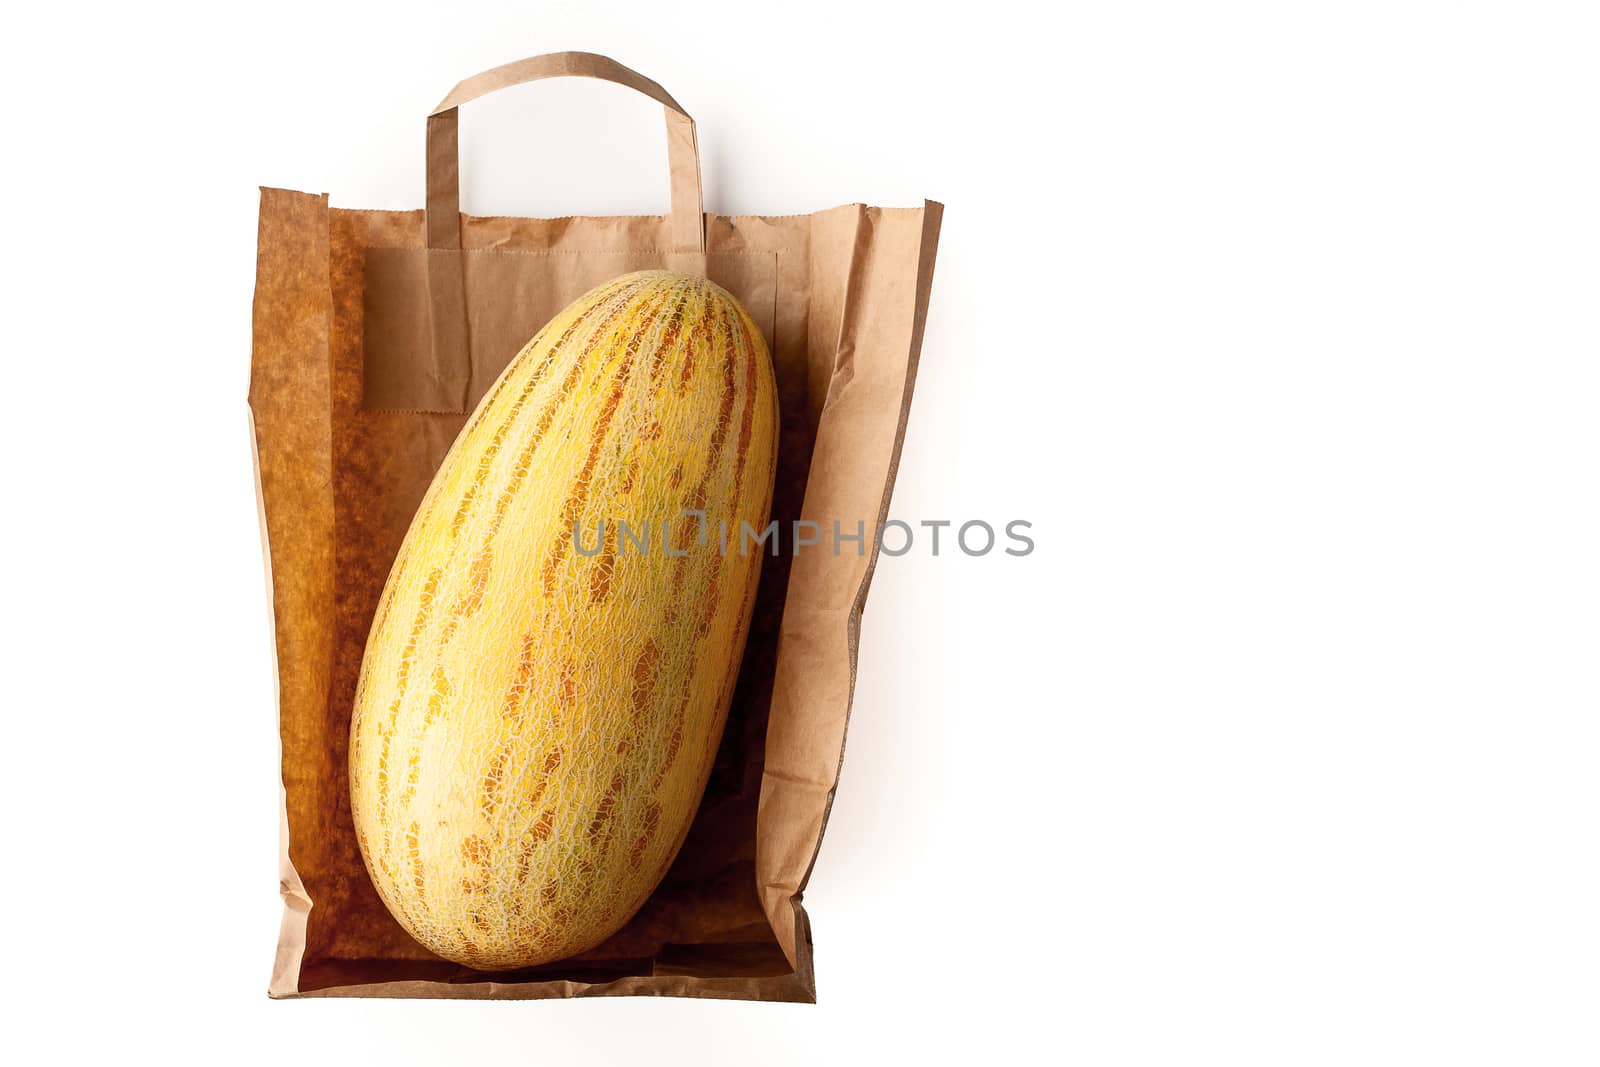 Melon inside a paper bag